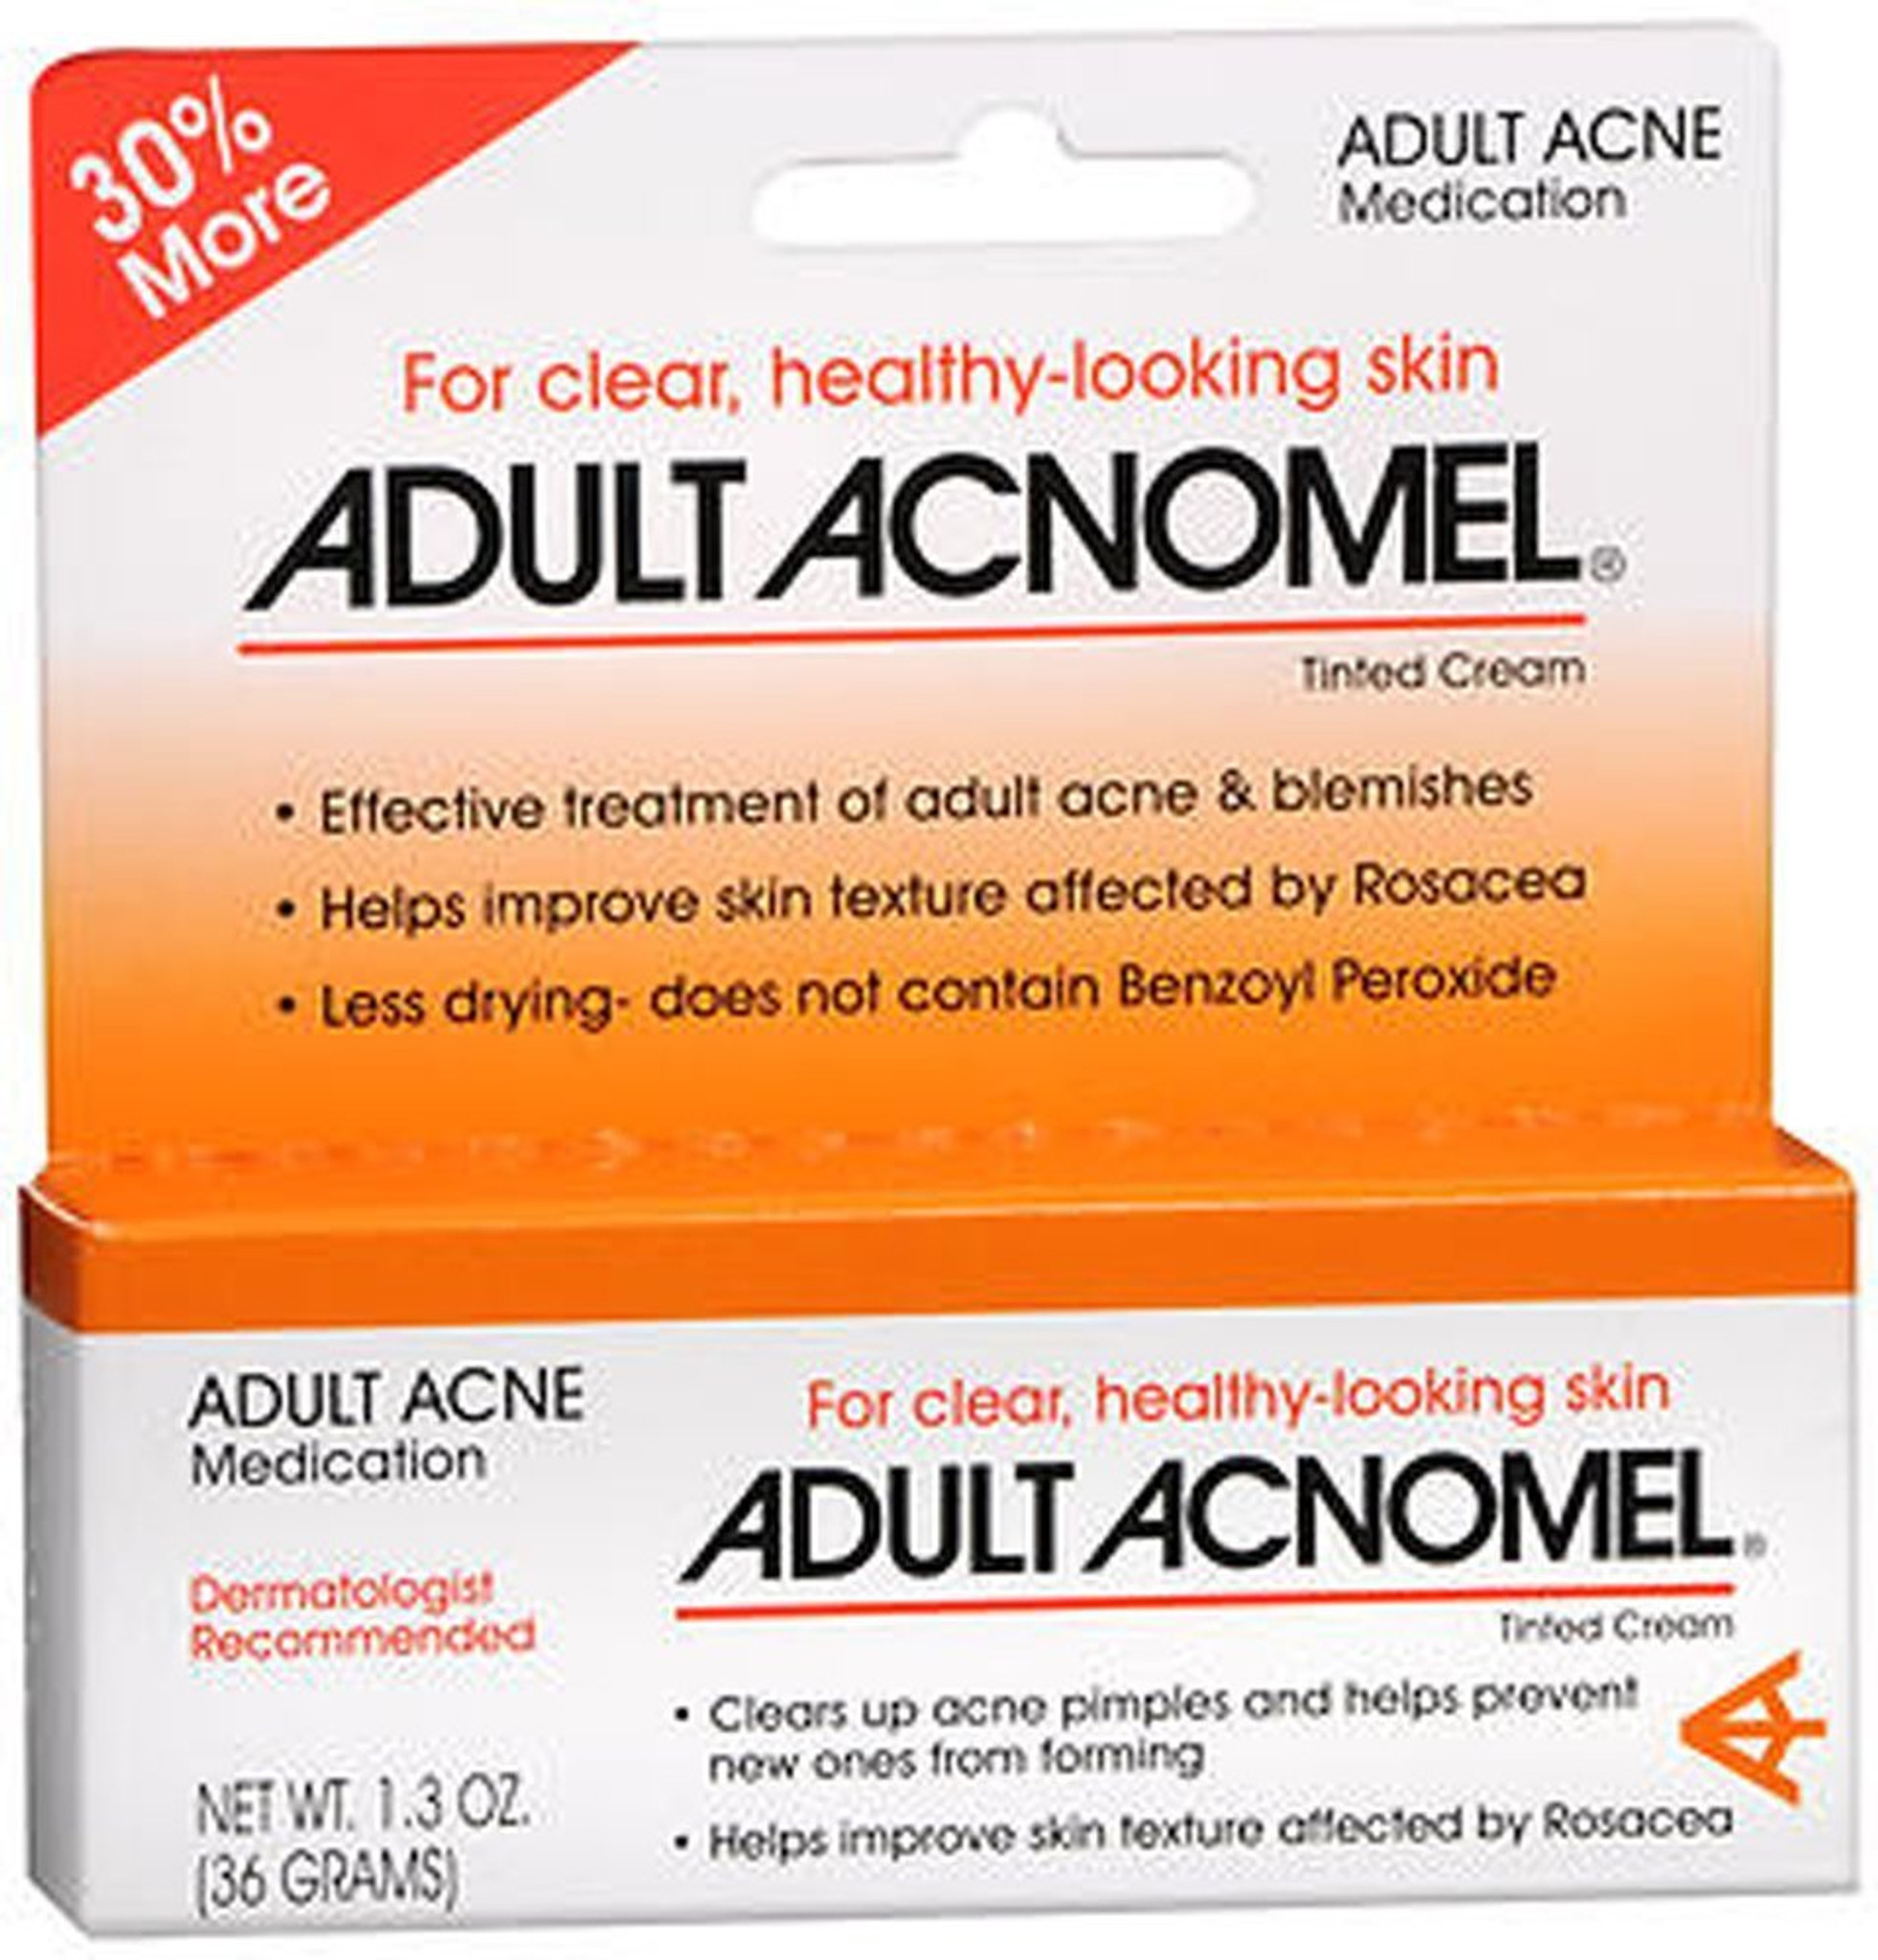 Acnomel Adult Acne Medication Tinted Cream 1 oz